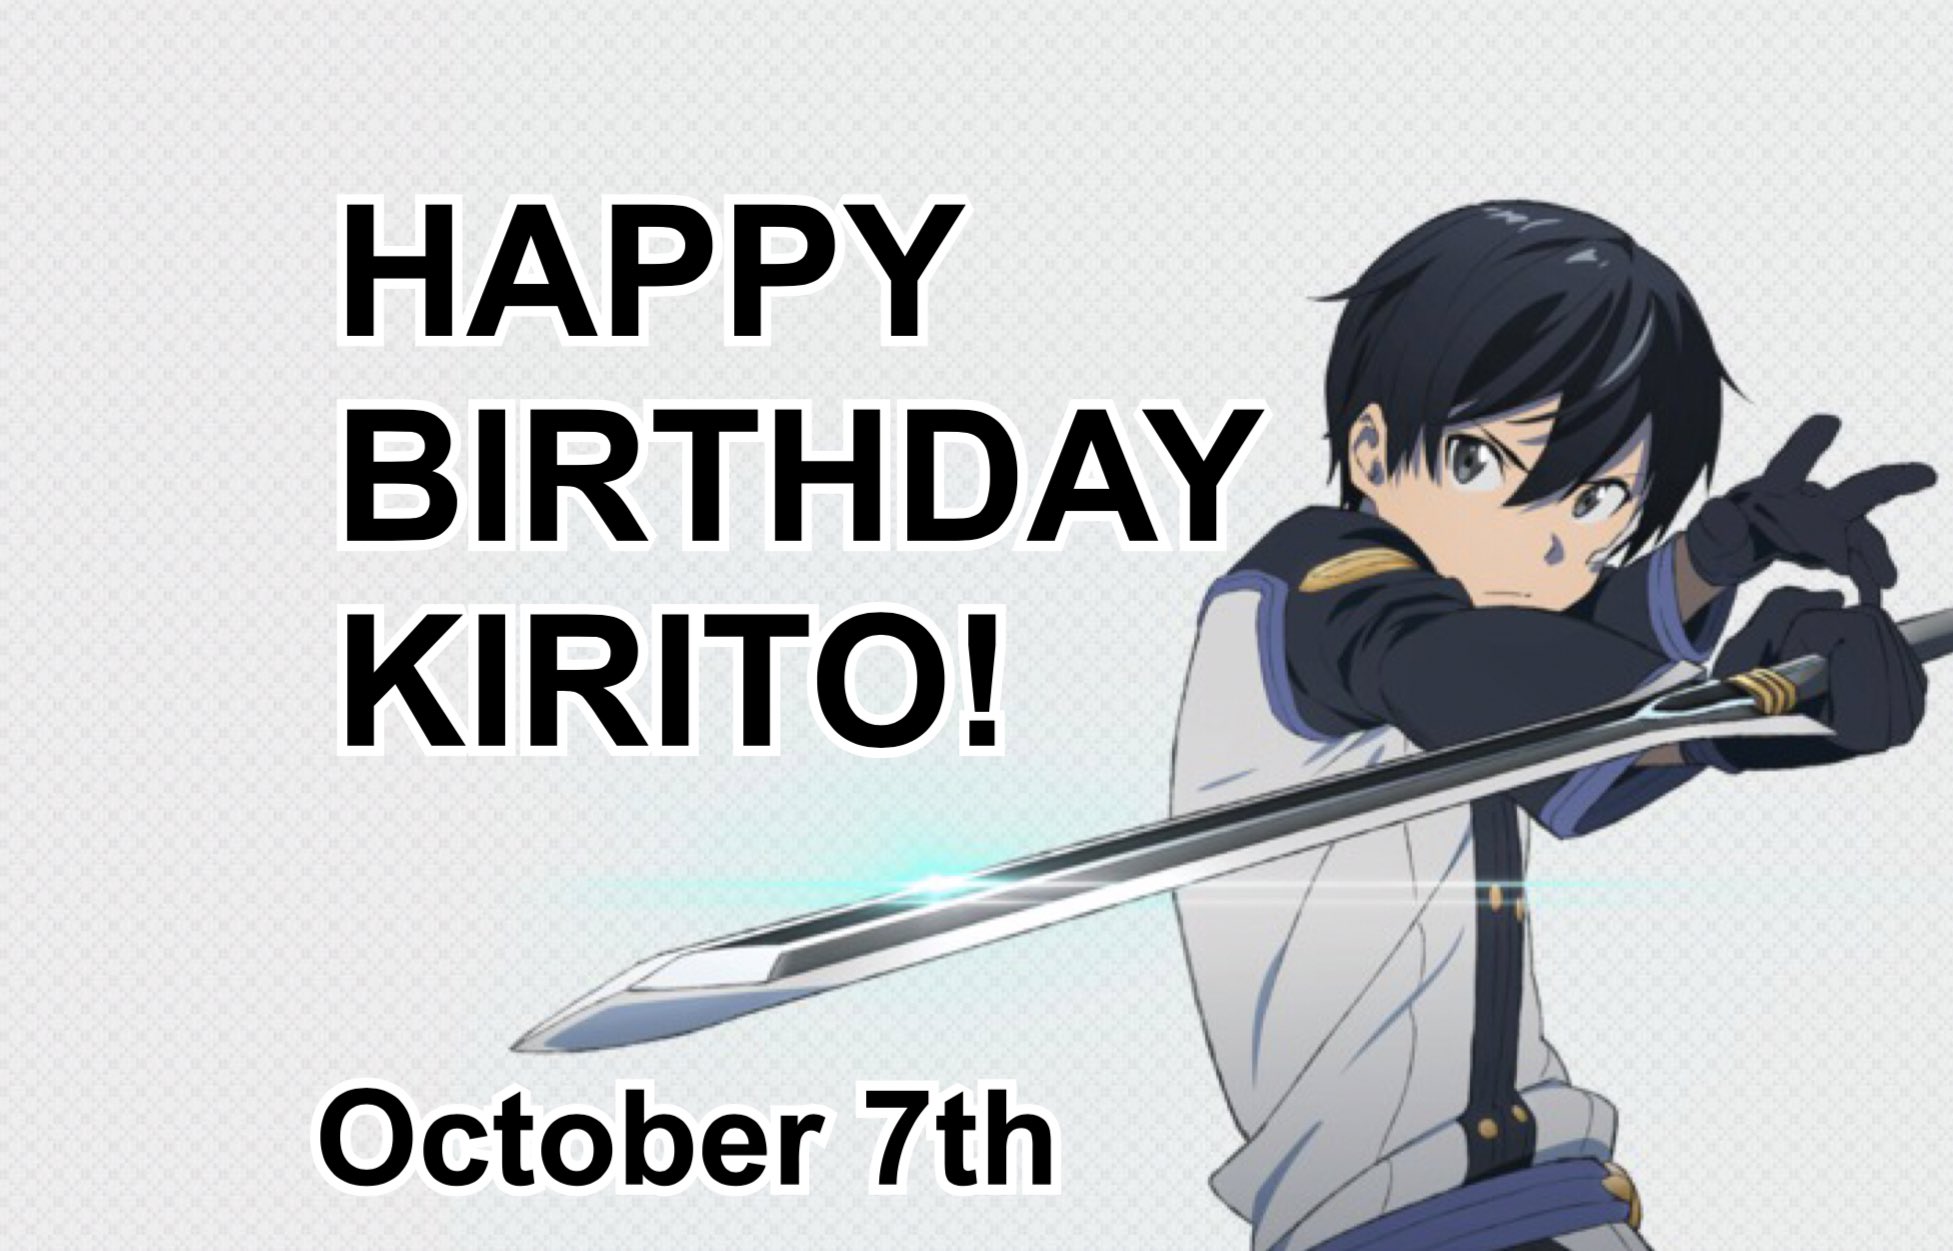 Kirito birthday